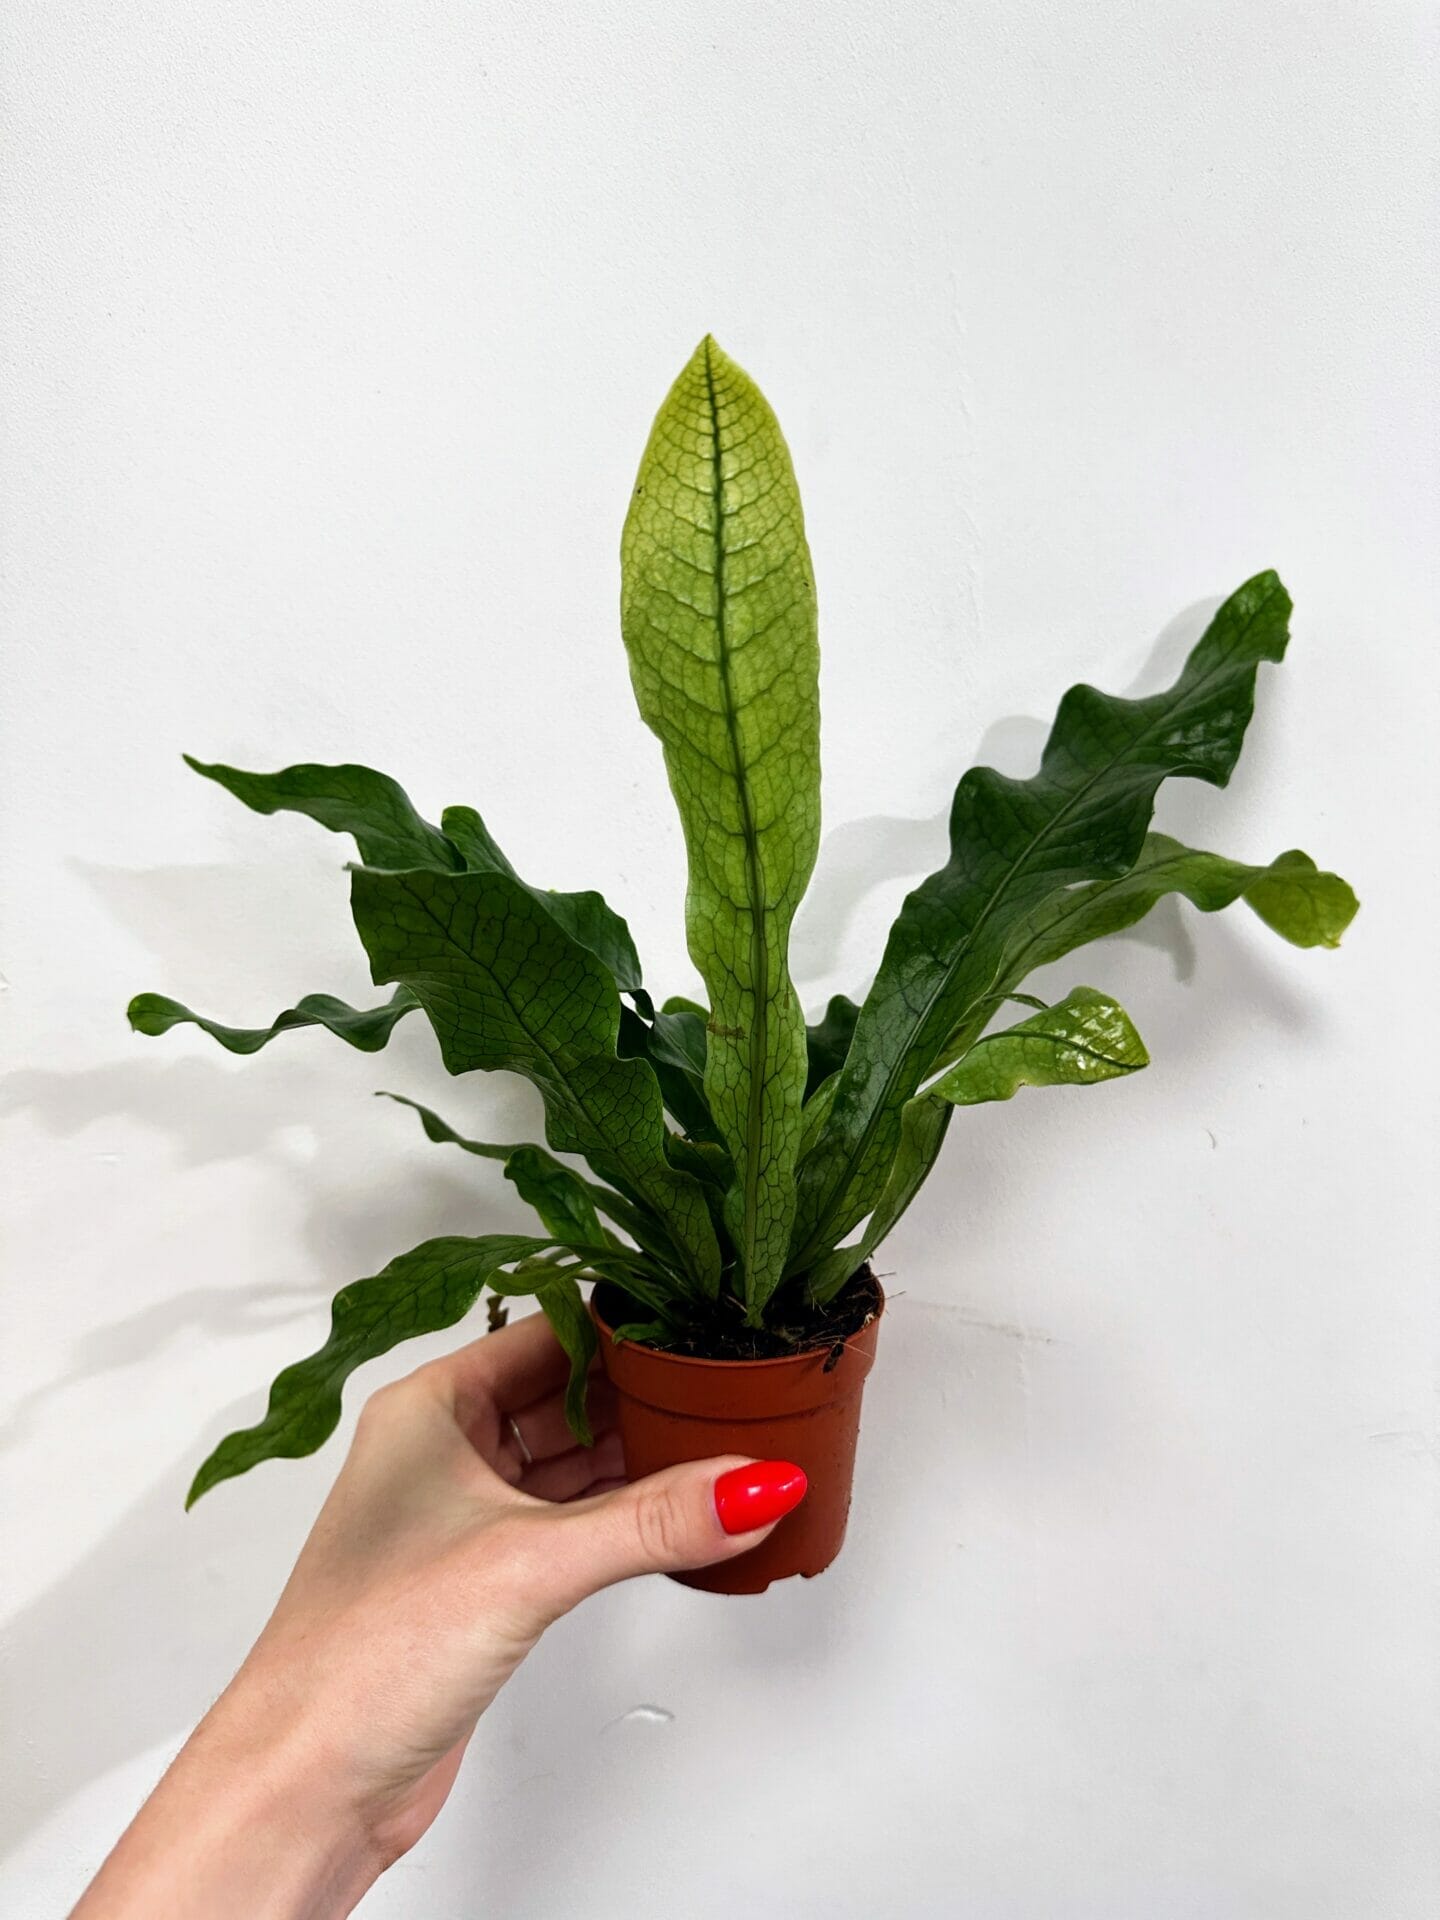 Crocodile Fern (Microsorum musifolium) house plant held up to camera with hand on white background. Leaves resemble crocodile skin